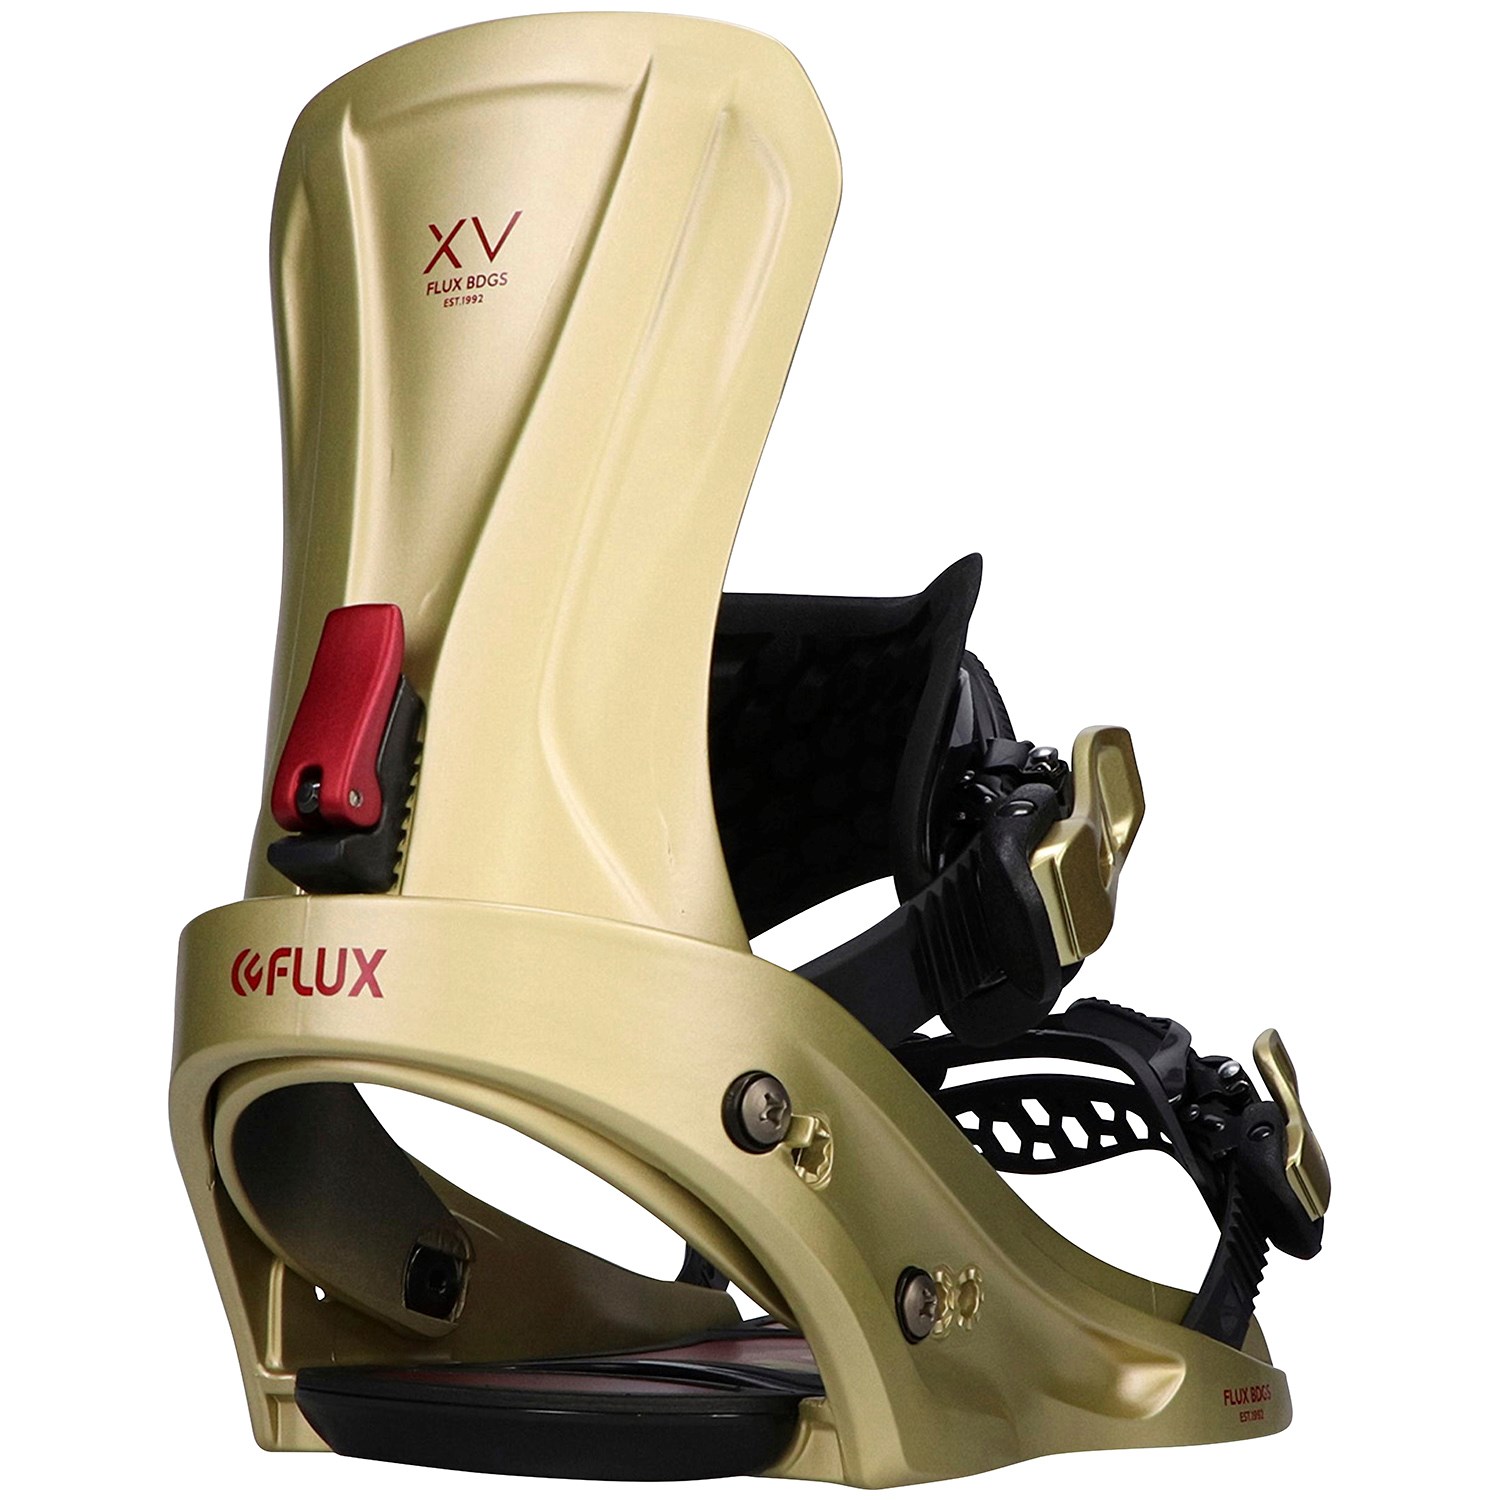 Flux XV Snowboard Bindings 2021